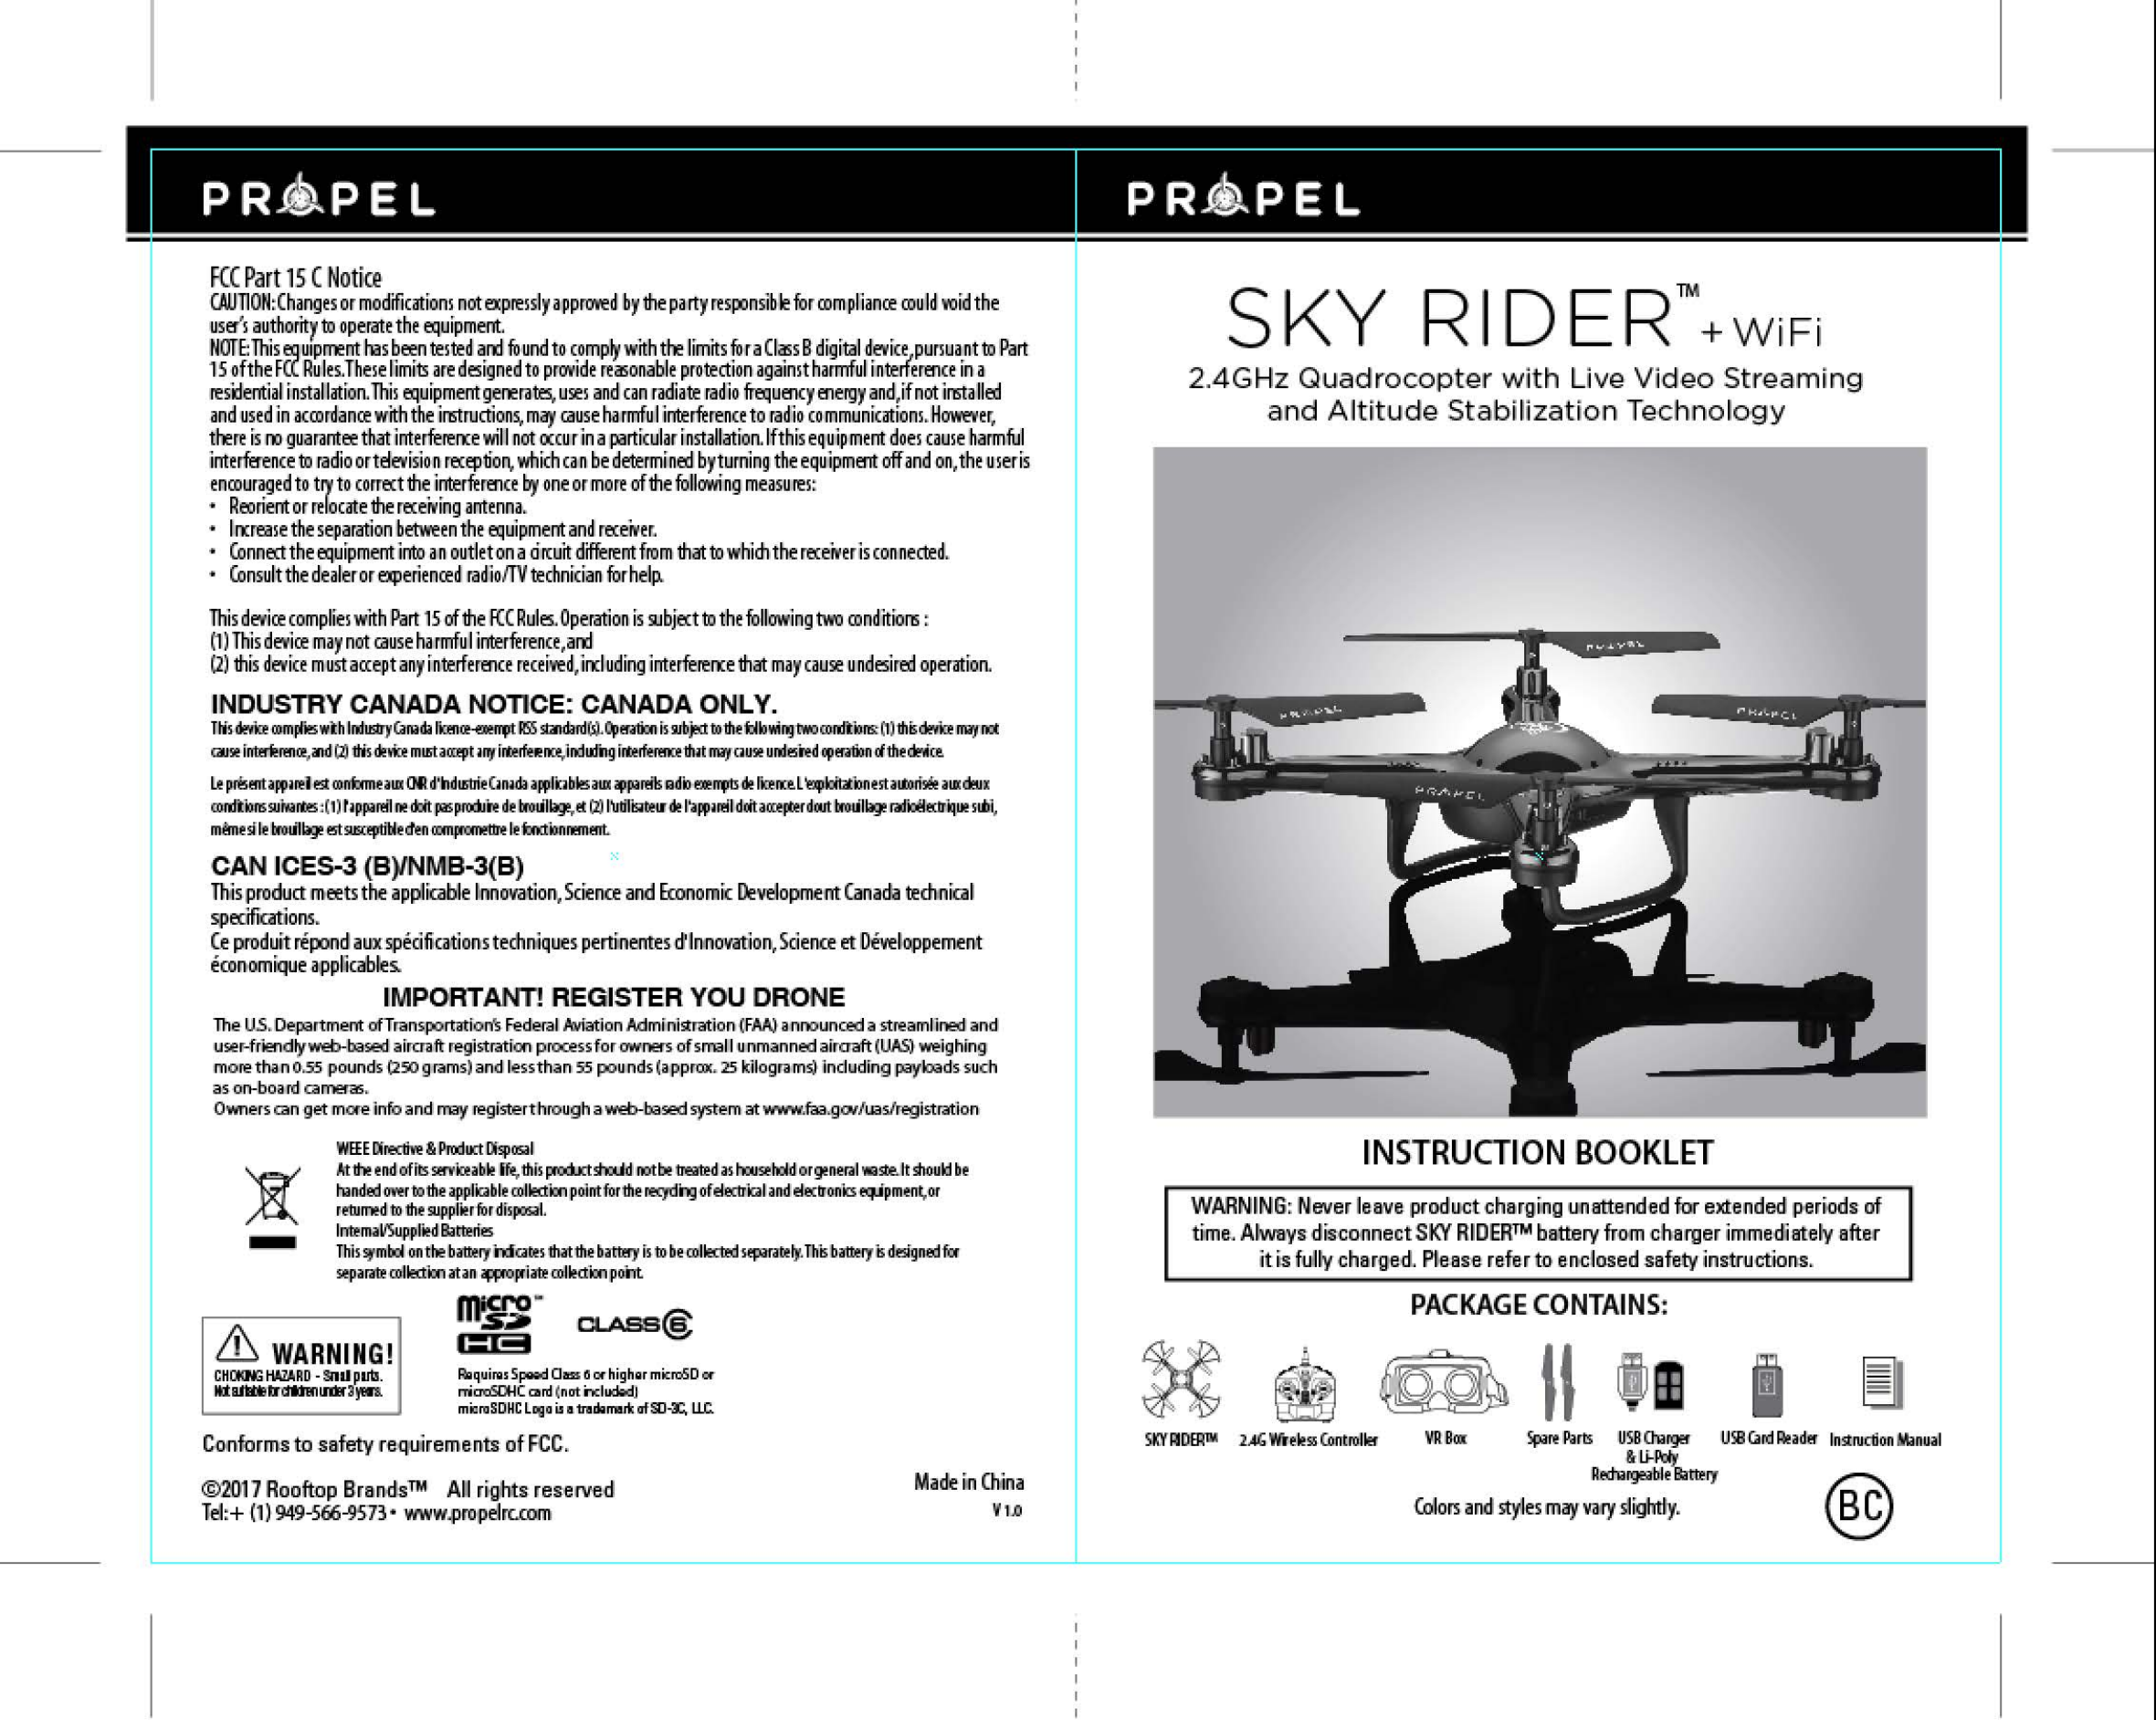 hd wing camera ii instruction manual